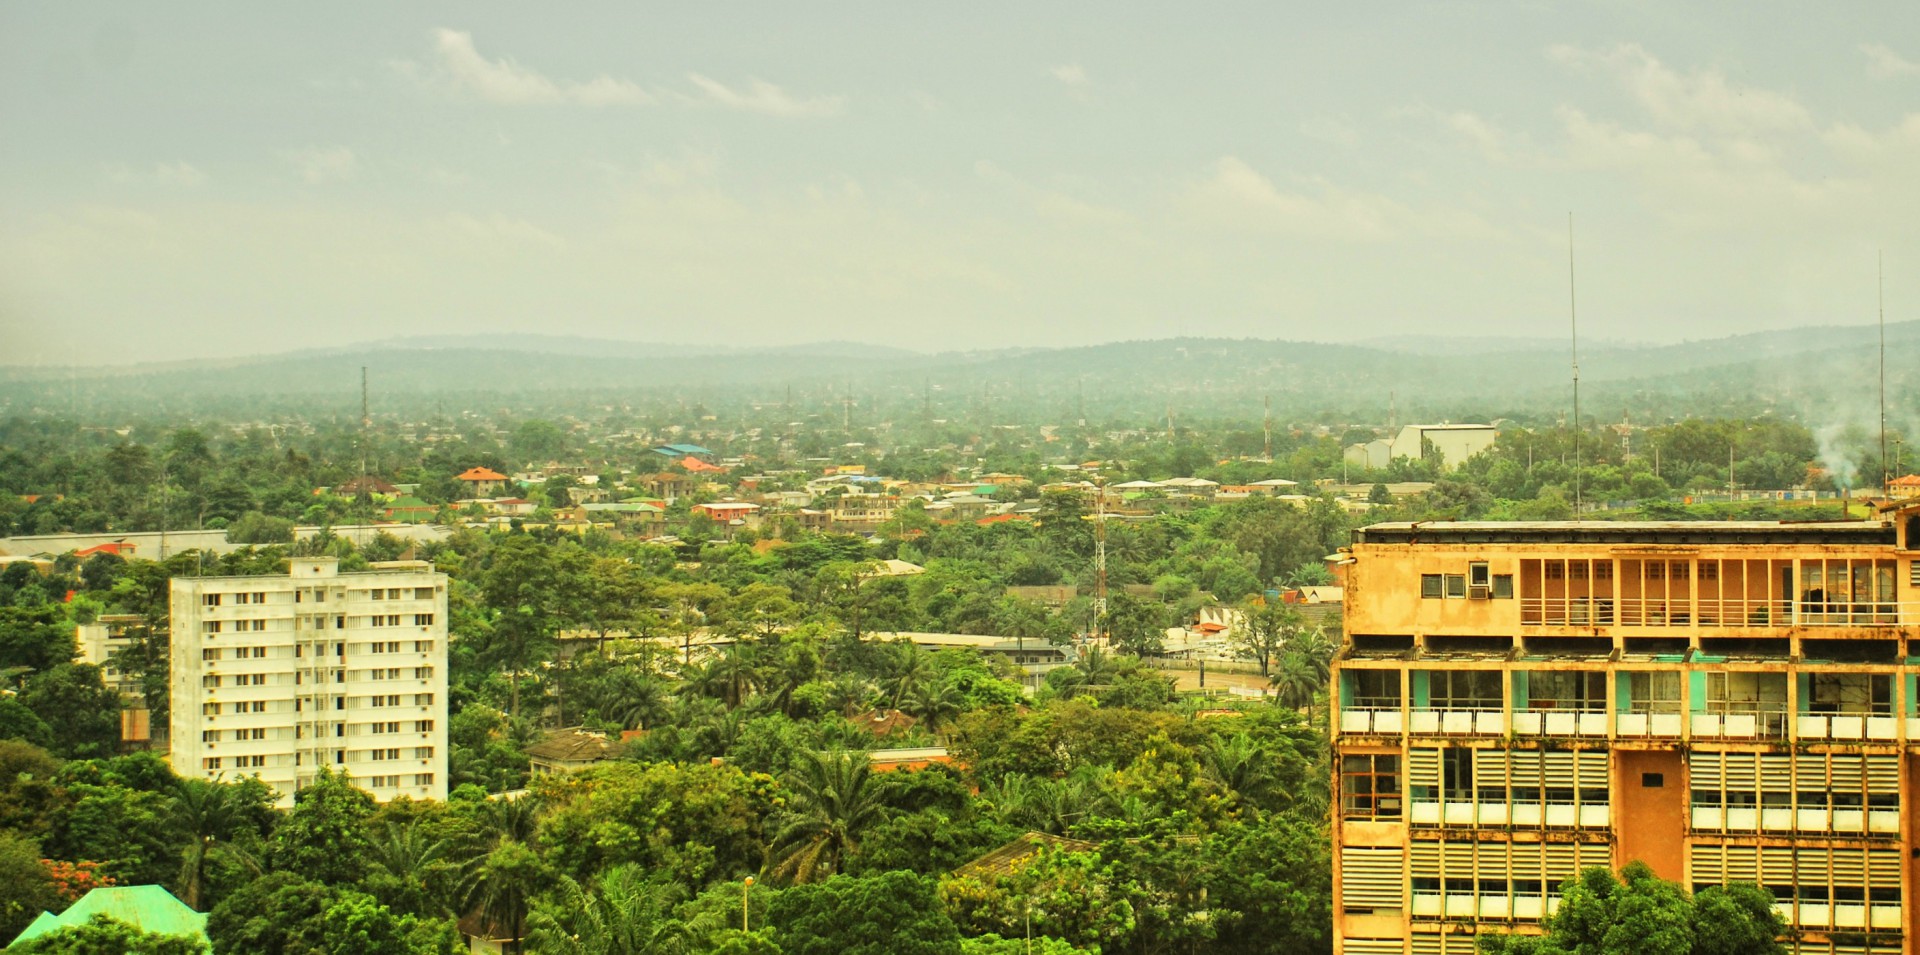 Vue de Kinshasa, en RDC (Photo:Irene 2005/Flickr/CC BY 2.0)